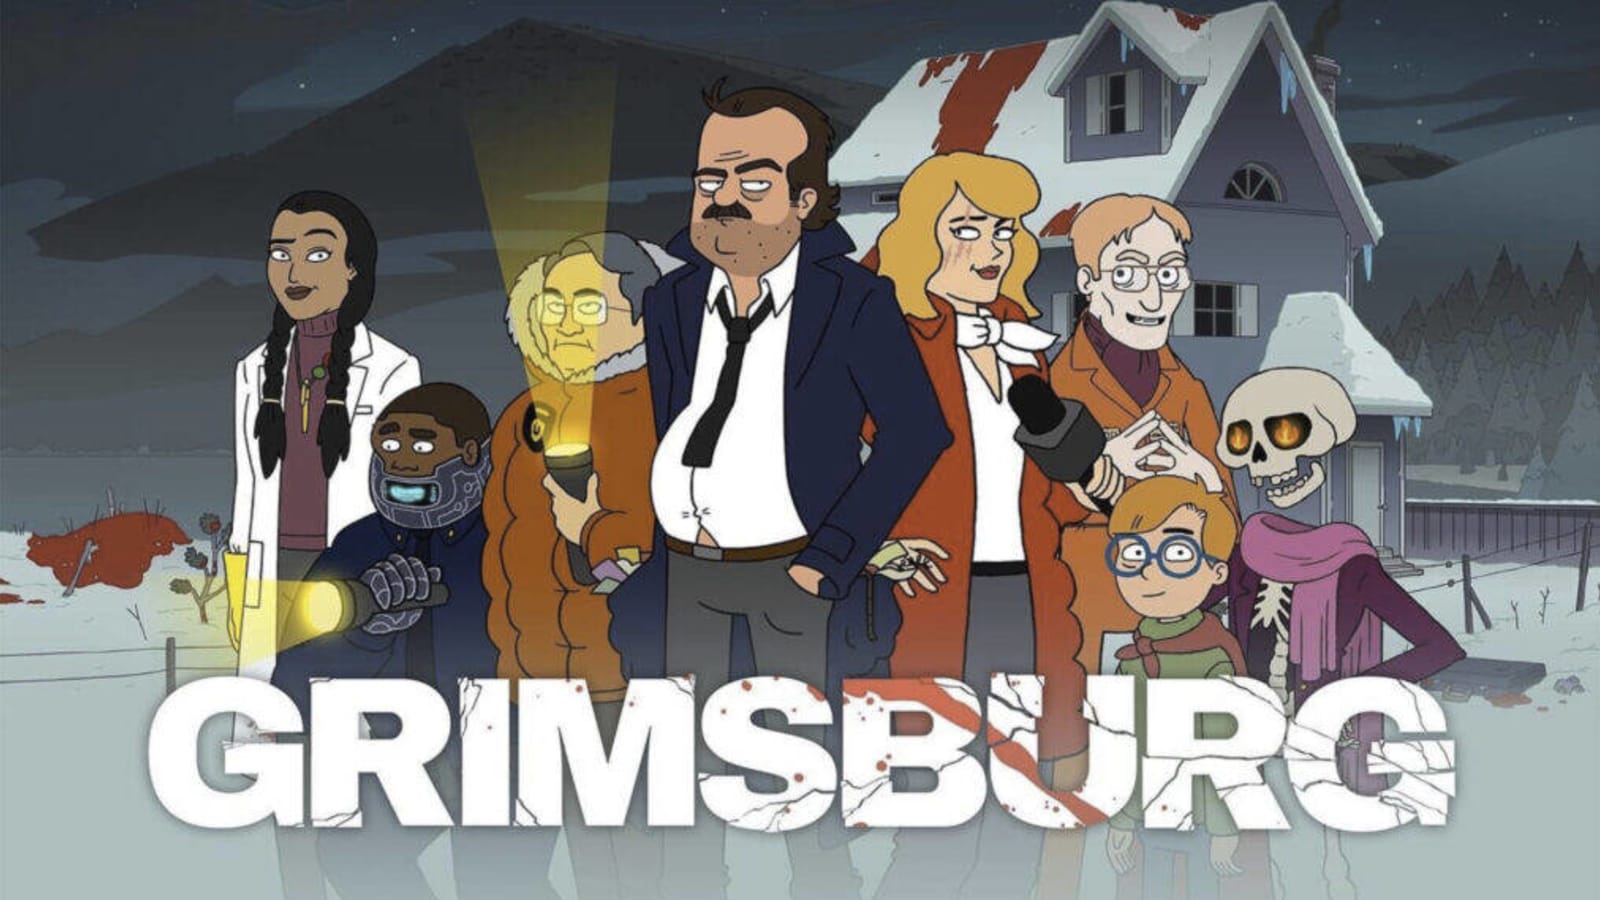 Fox Schedules Midseason Debut for ‘Grimsburg,’ Animated Comedy Starring Jon Hamm